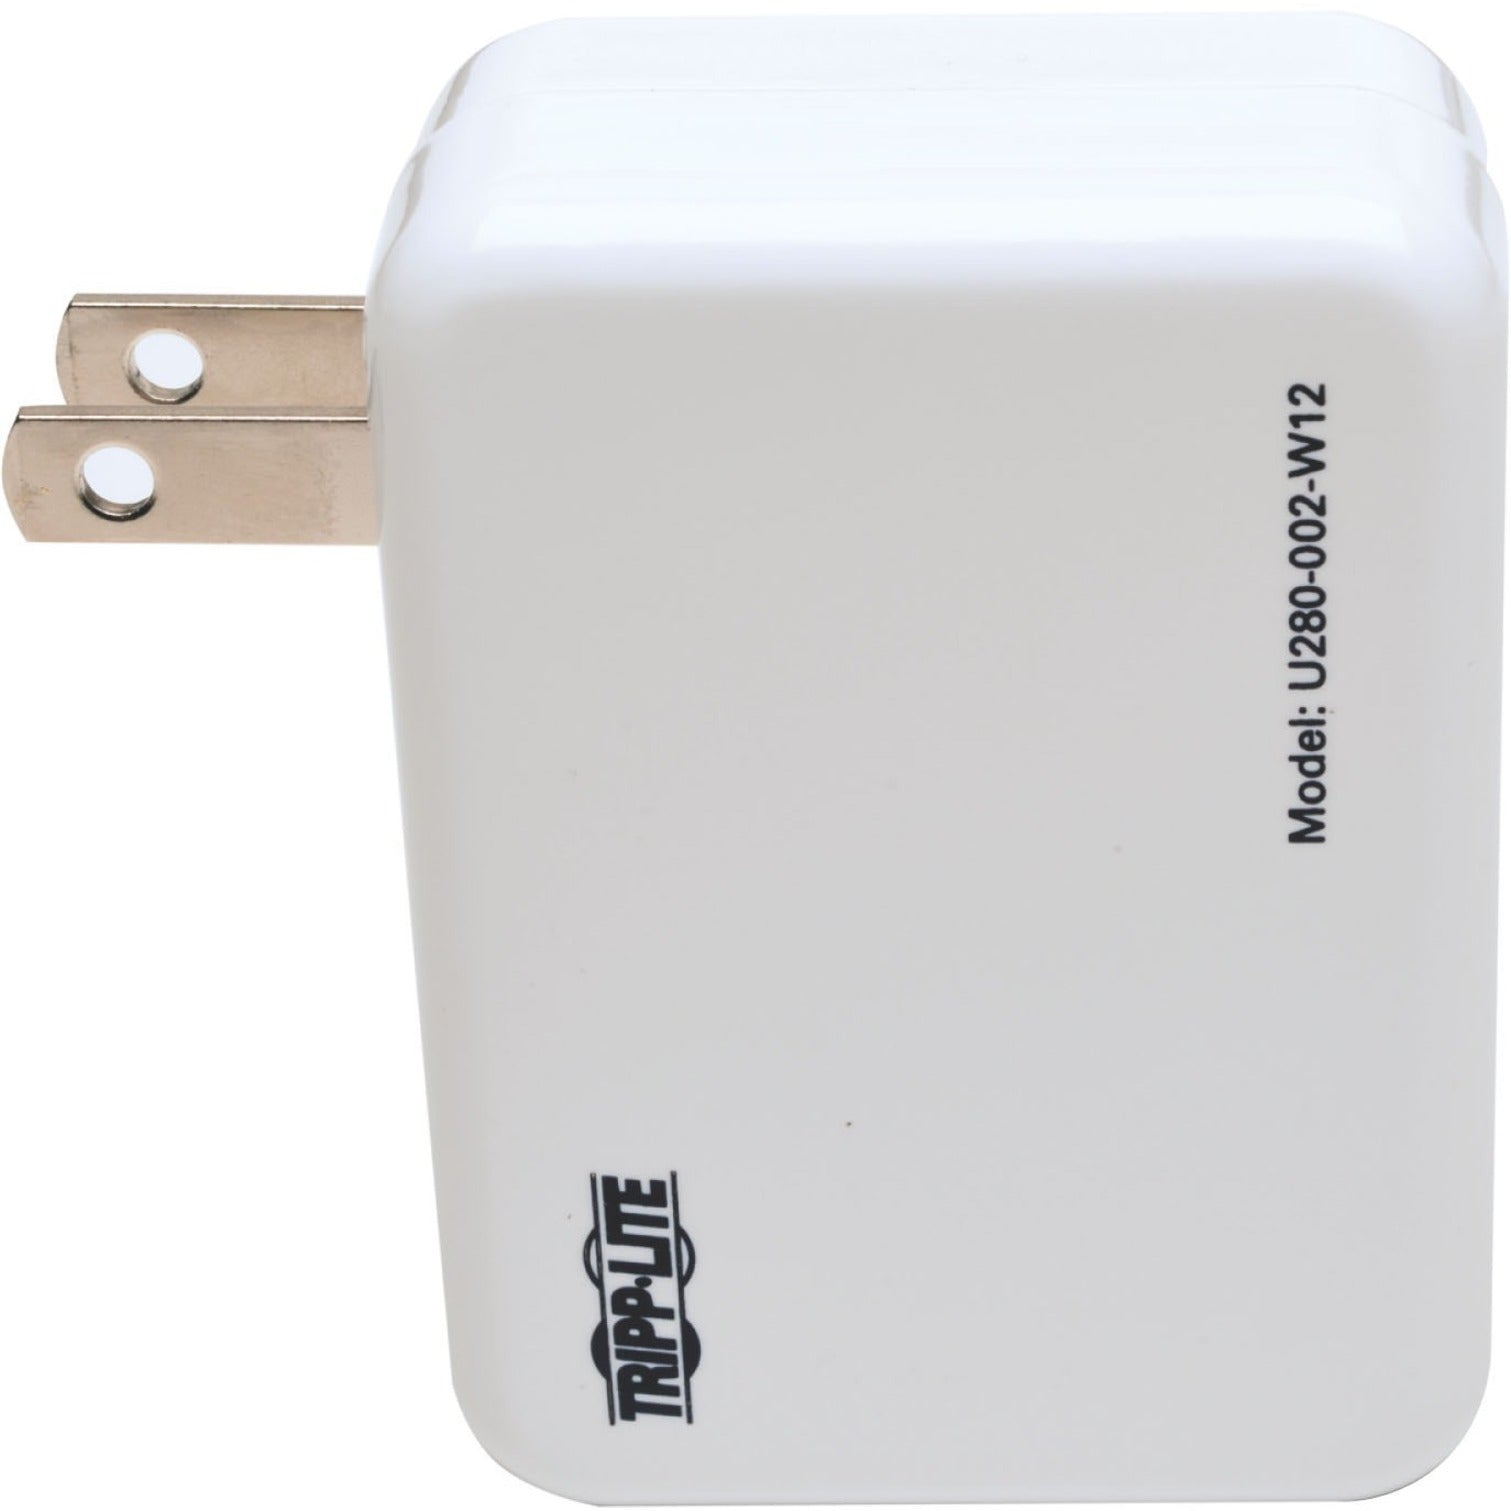 Tripp Lite U280-002-W12 USB Wall/Travel Charger, 5V, 2.4A Output, 2-Port